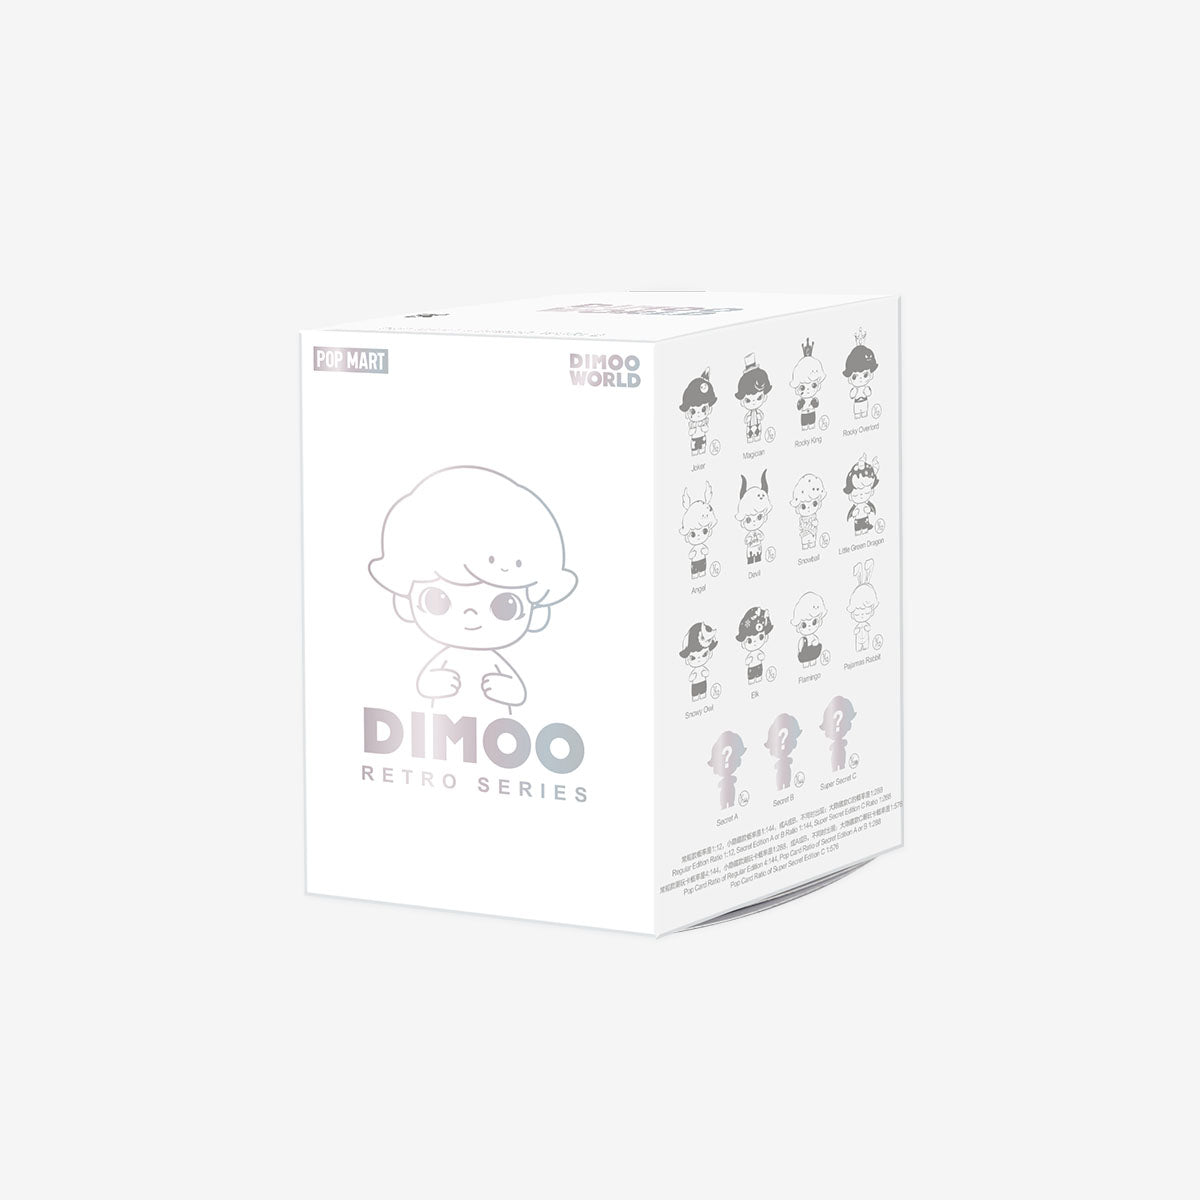 【Restock】Pop Mart Dimoo: Retro Series Blind Box Random Style